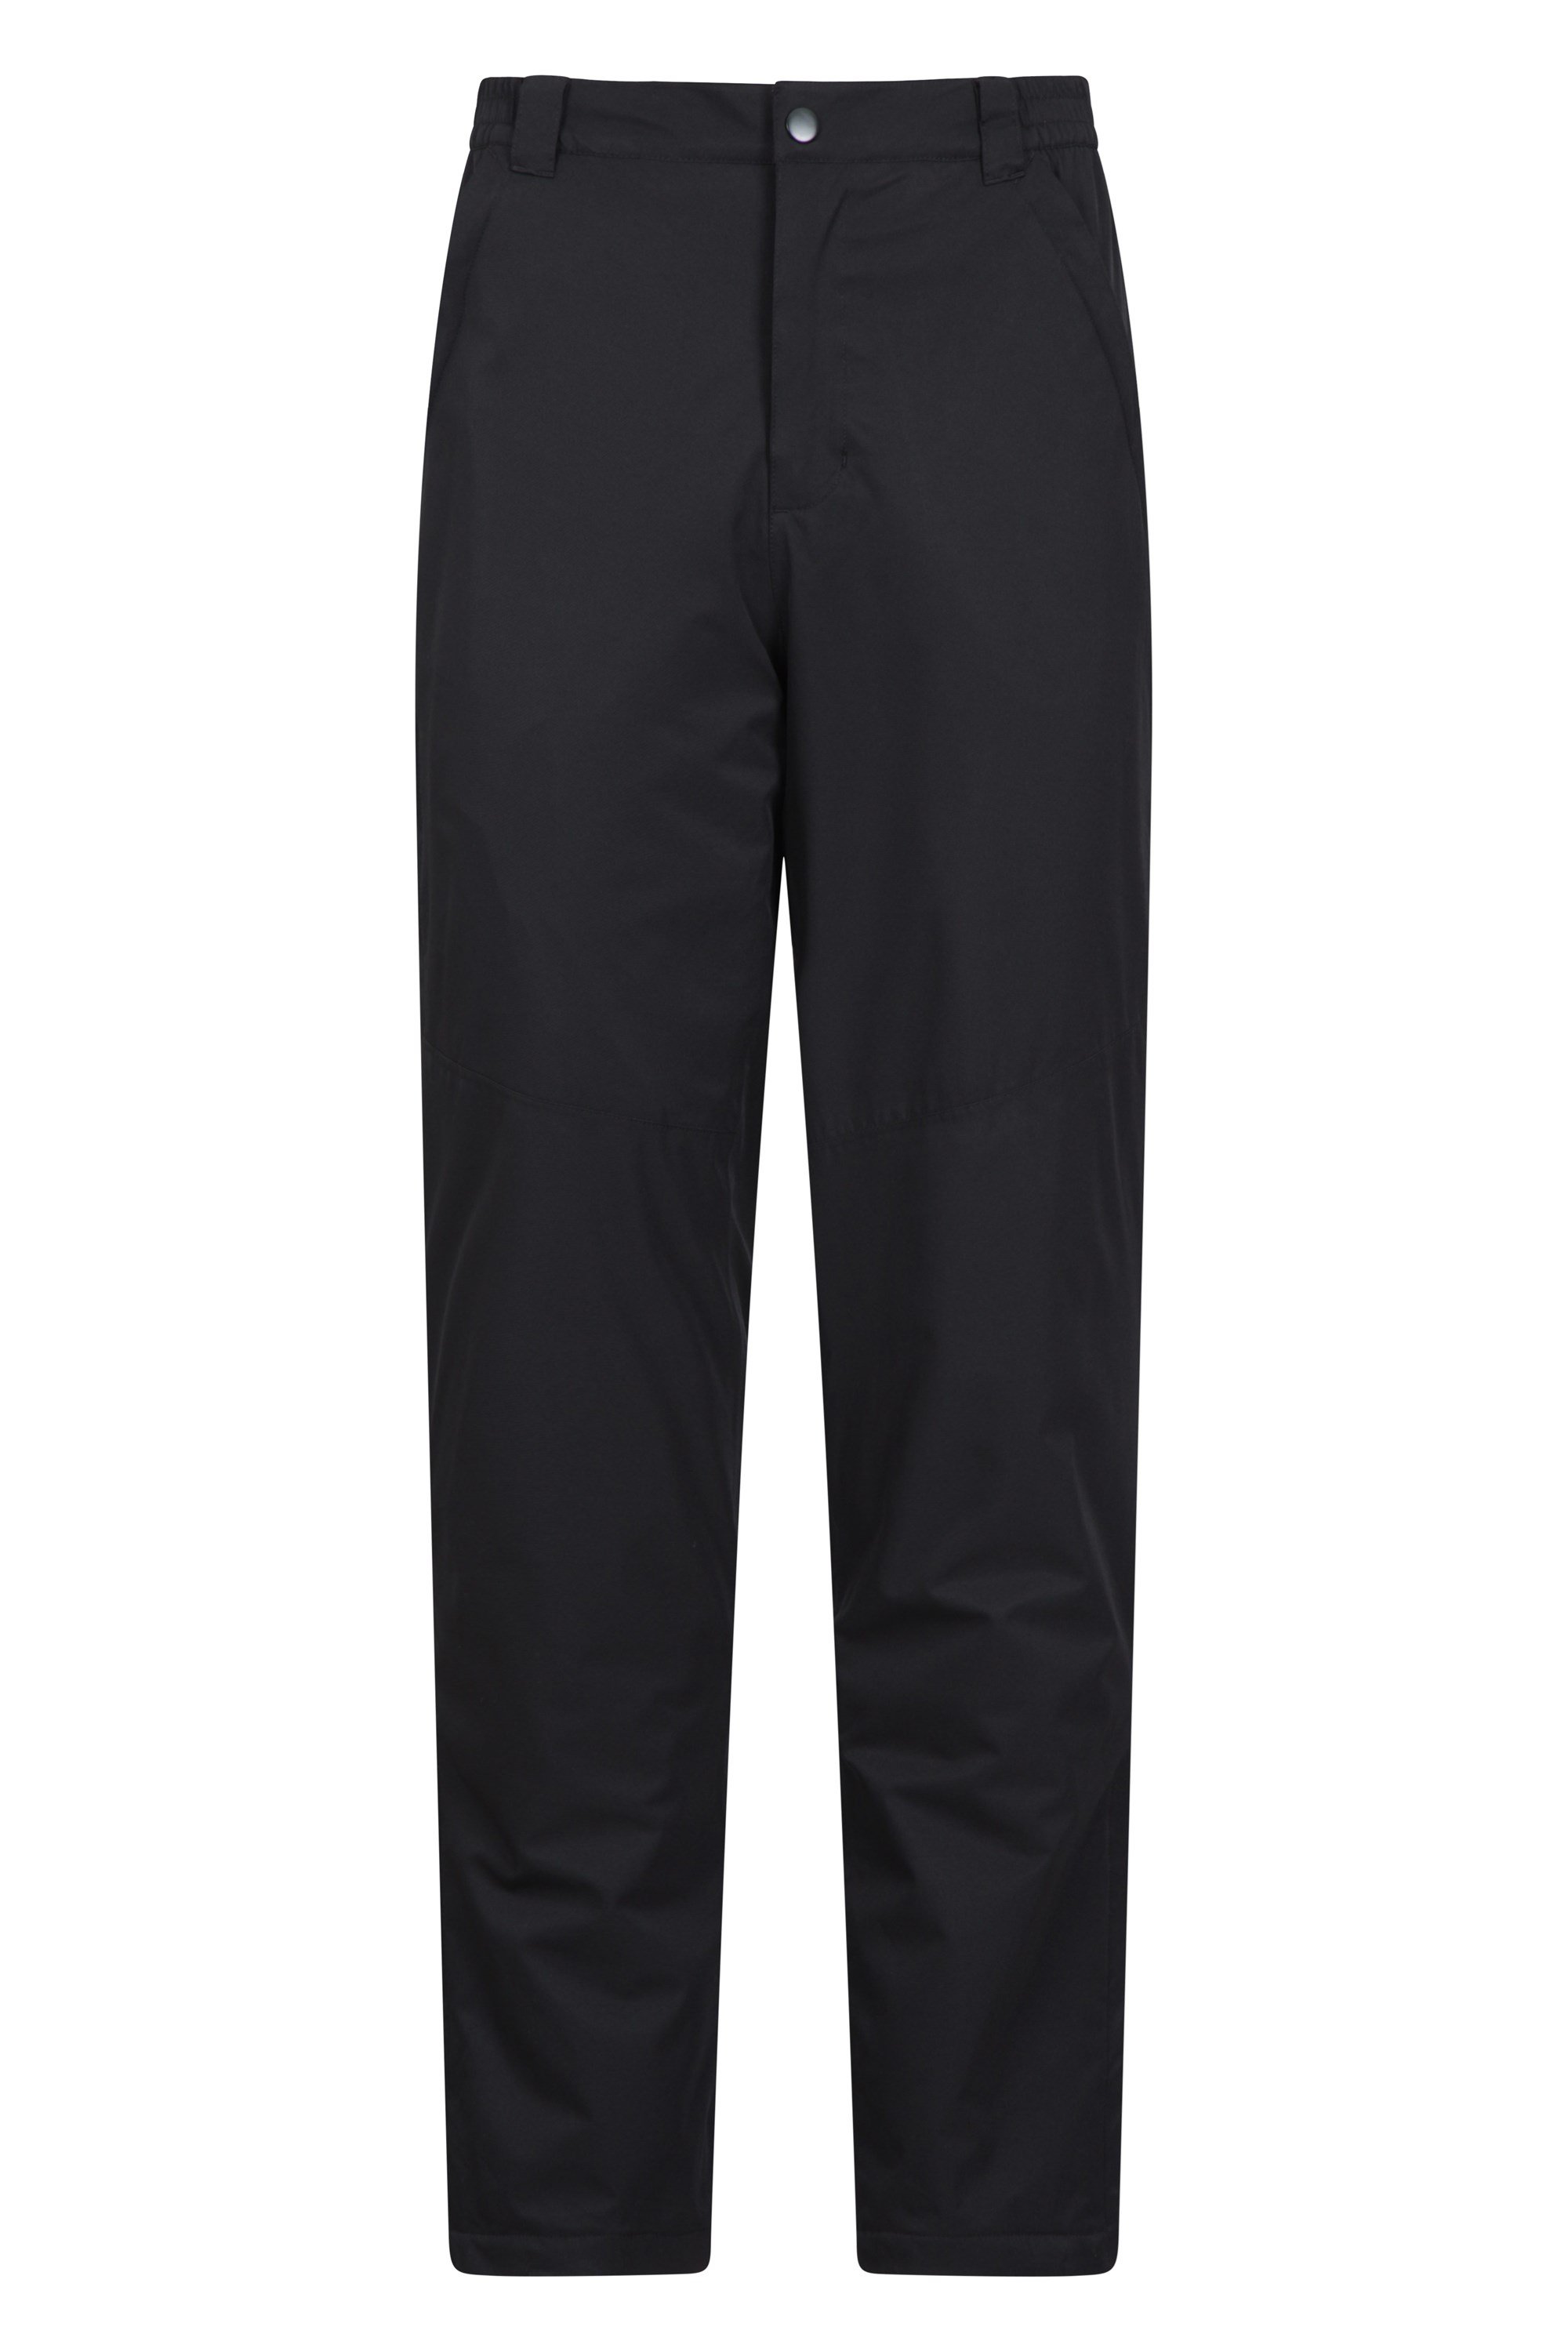 Terrain Mens Insulated Trousers - Short Length - Black